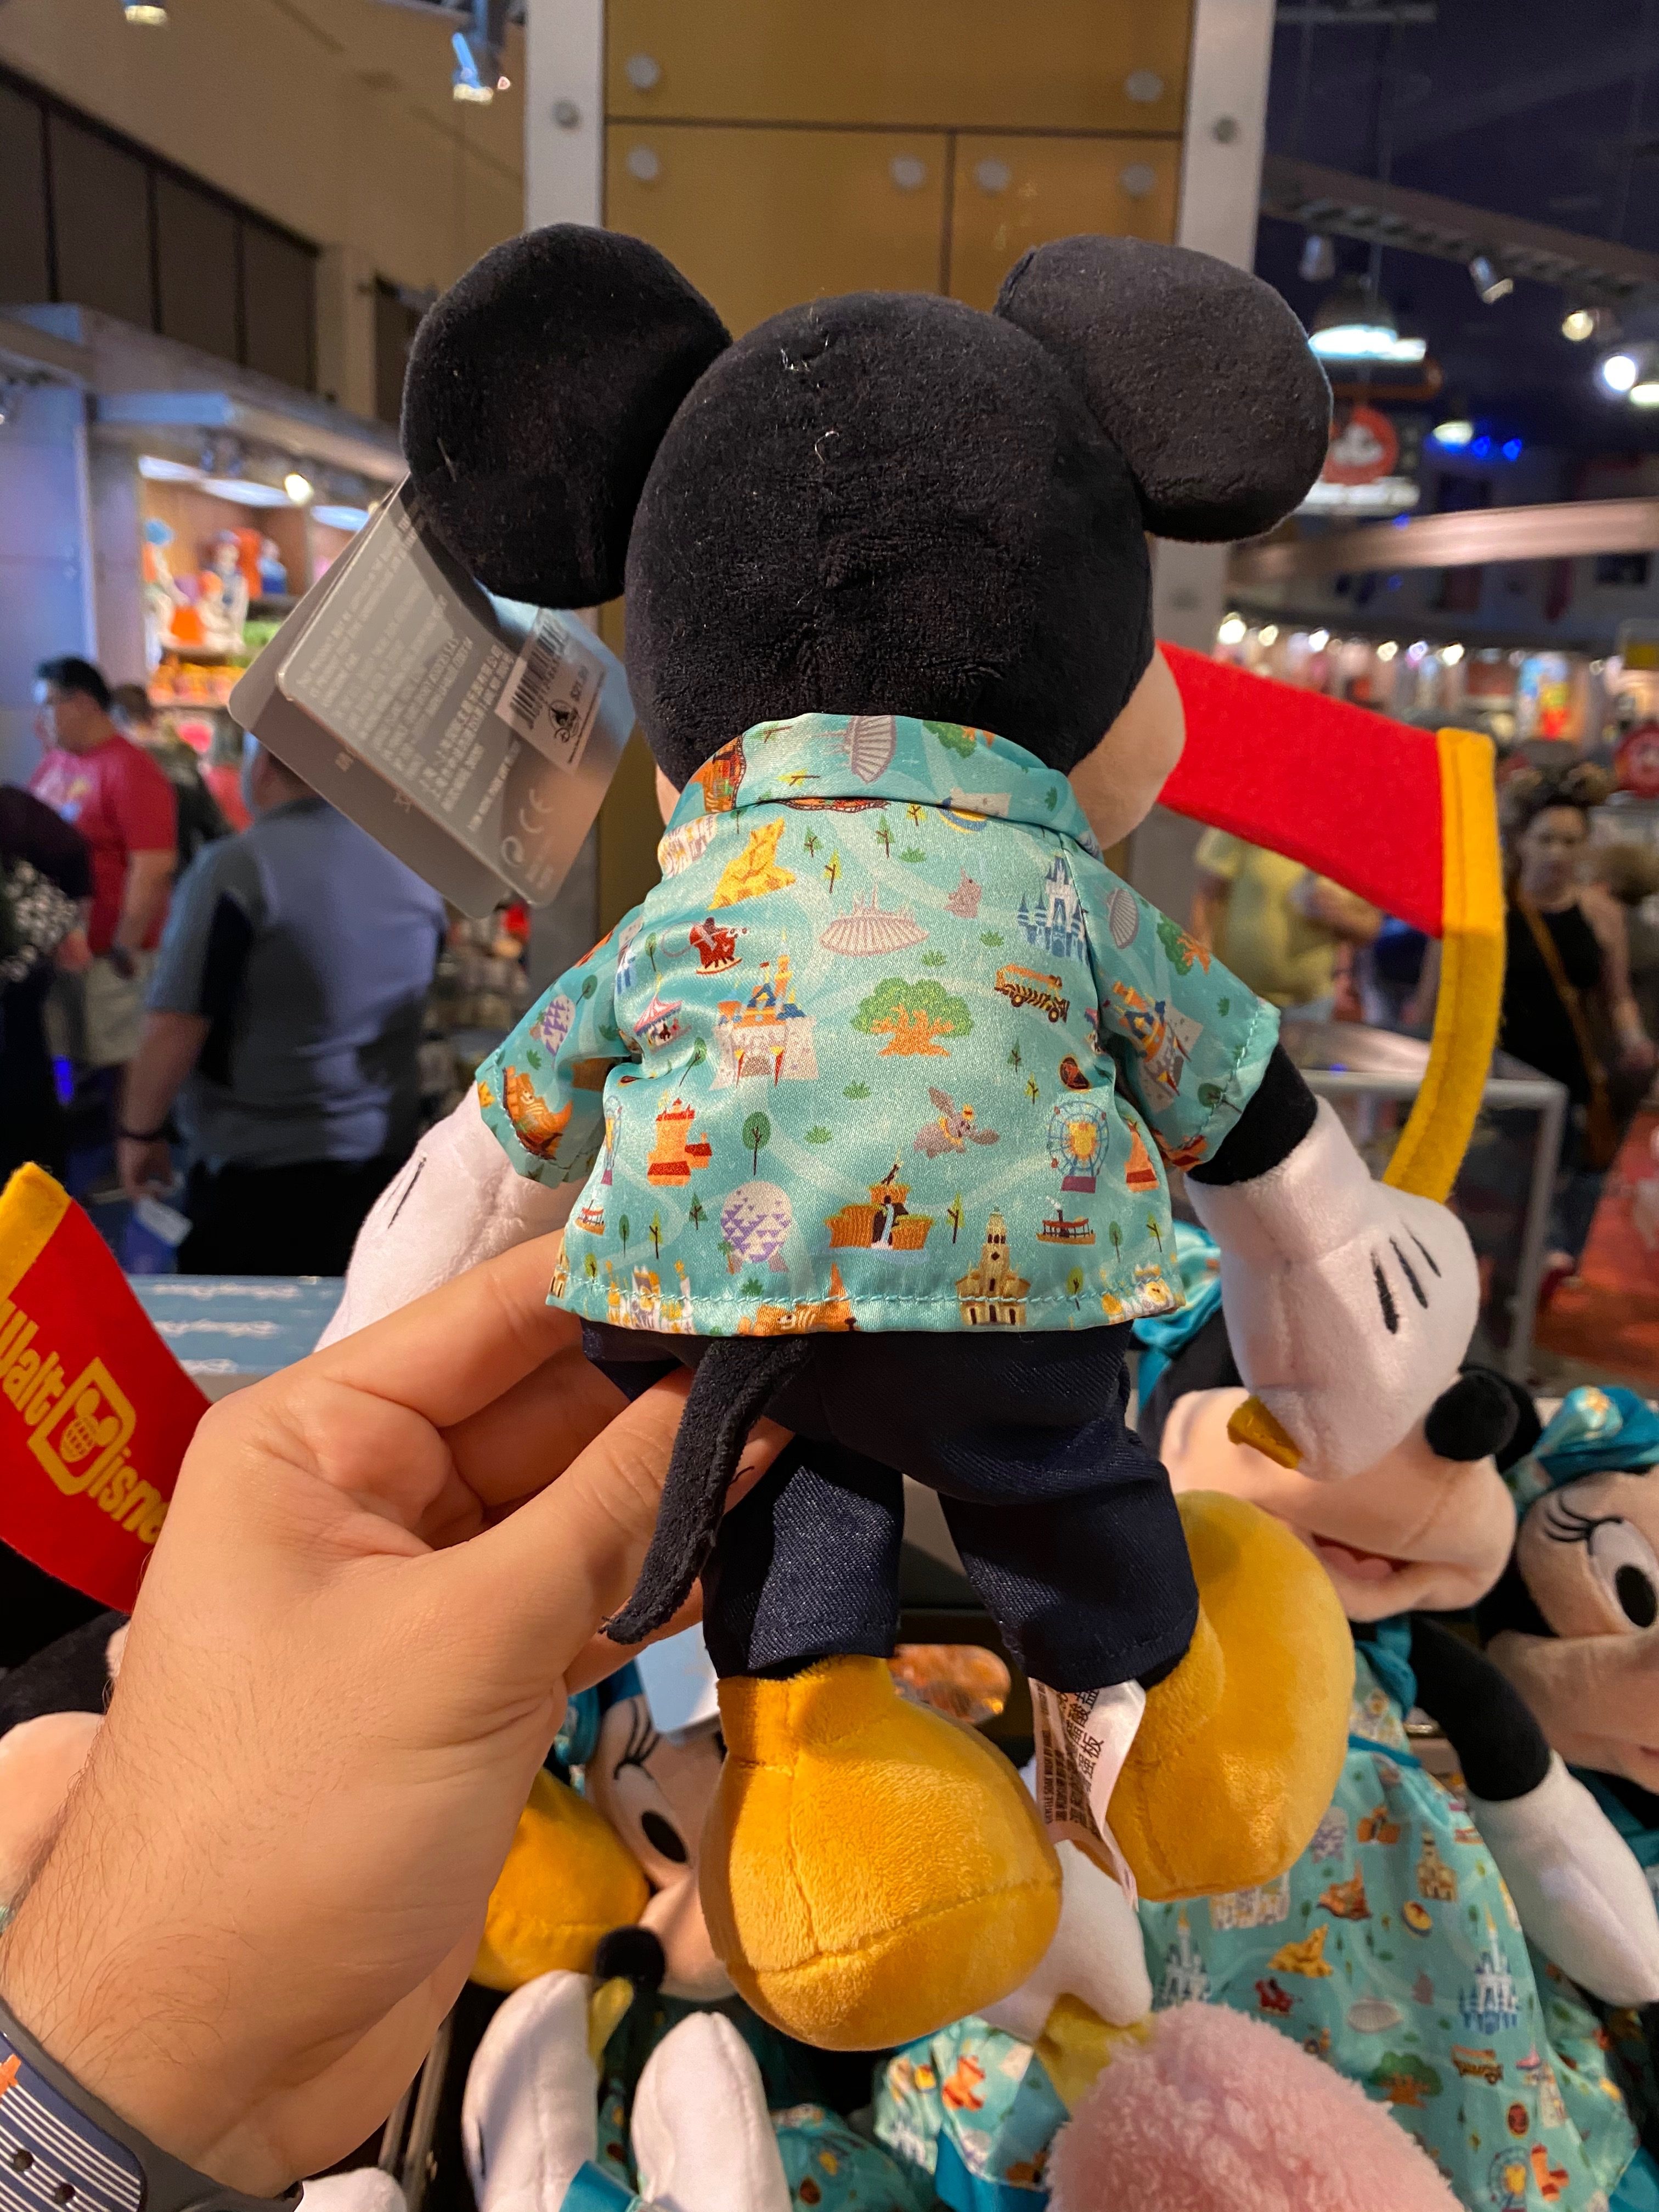 Mickey Mouse Plush - $21.99